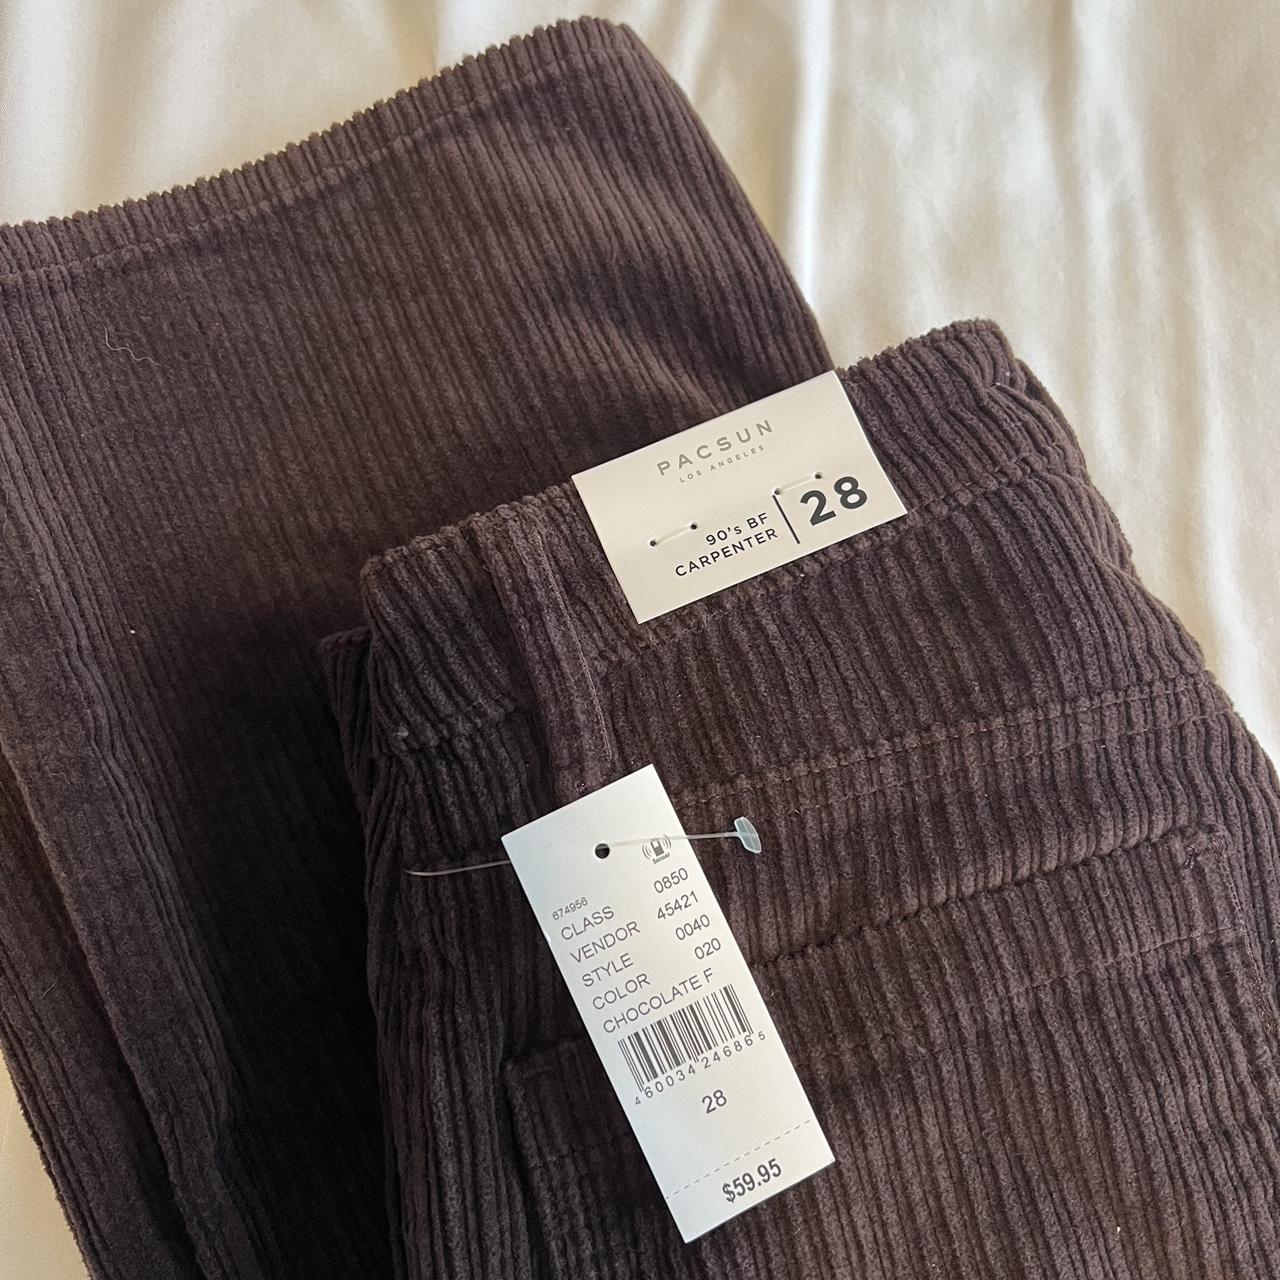 Brown utility corduroy jeans. Super cute but didn’t... - Depop